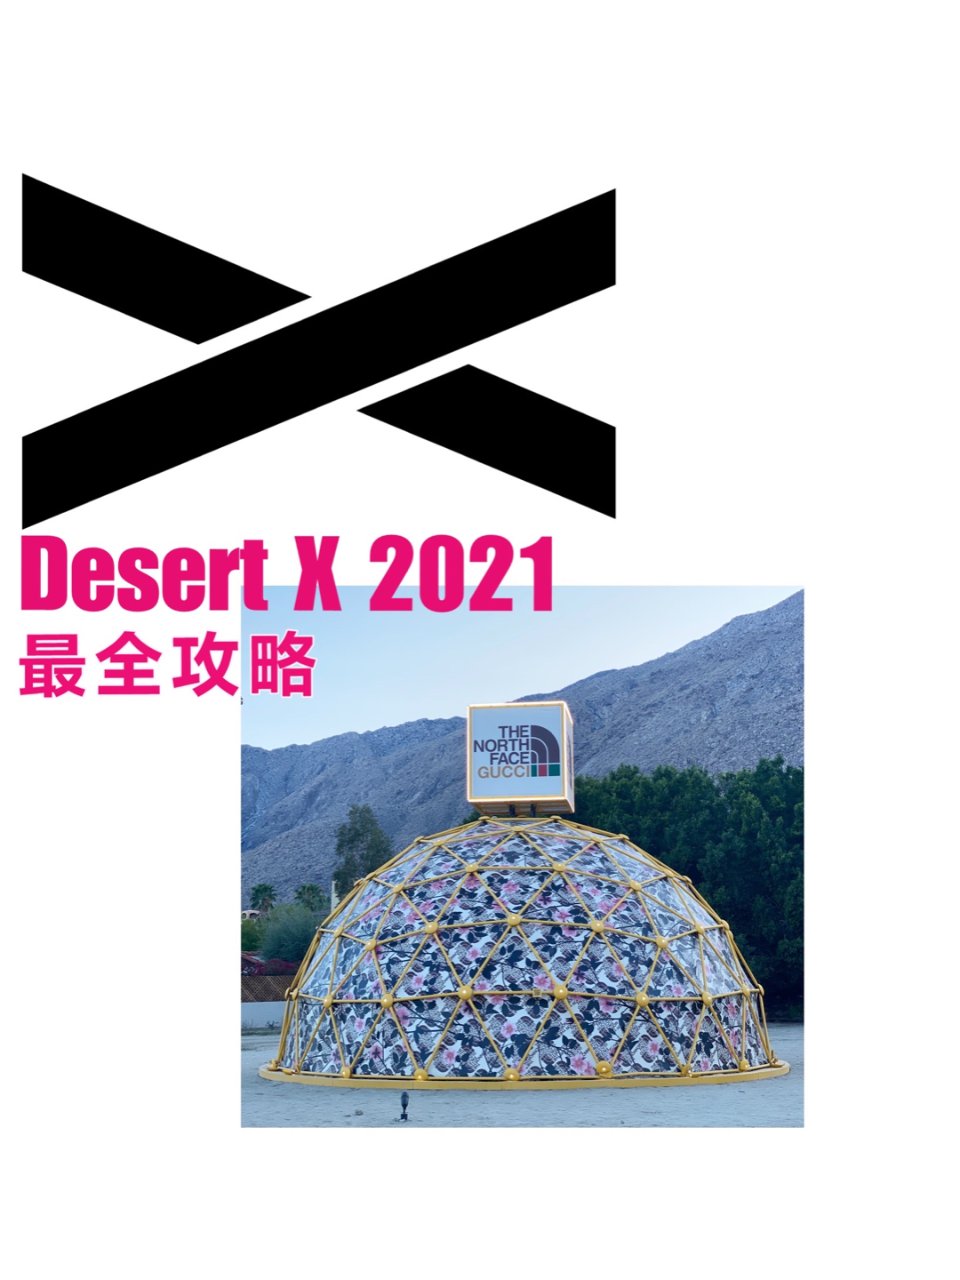 一年一度的Desert X 2021 值...